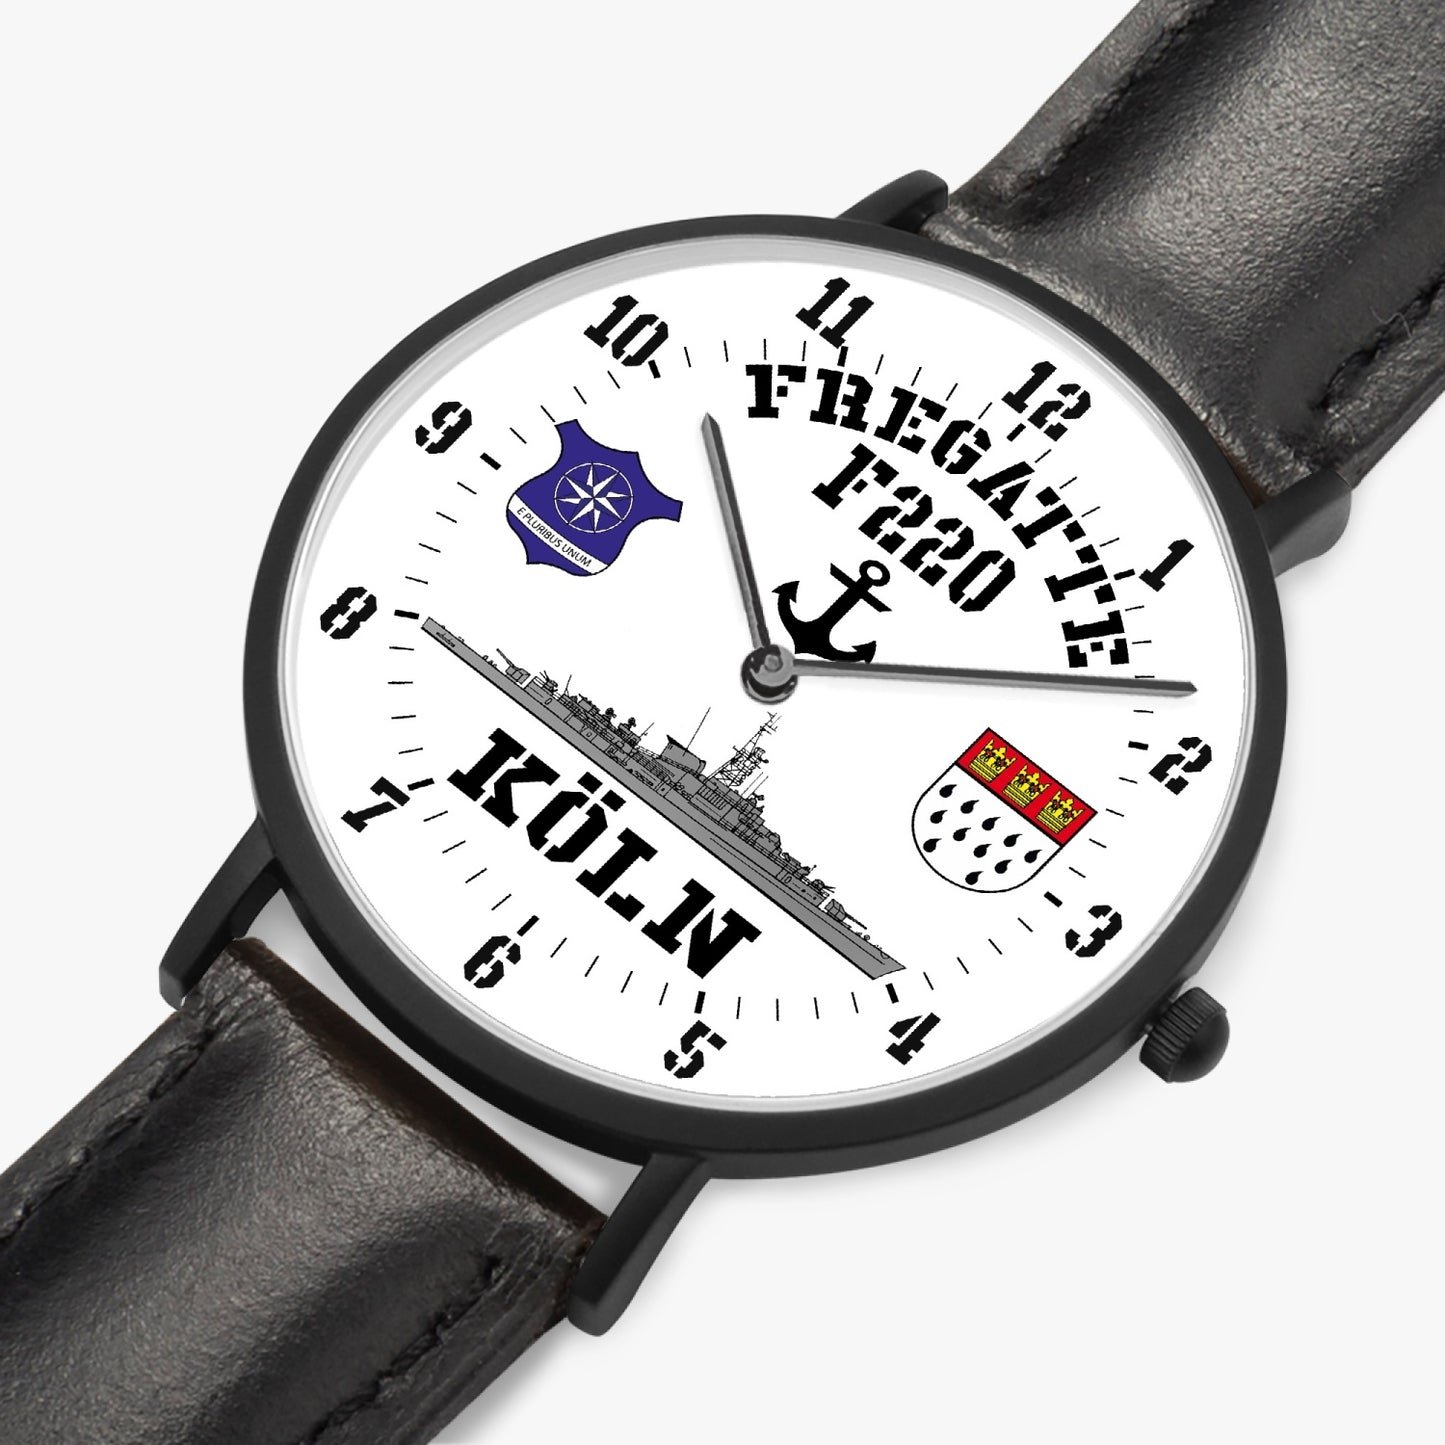 160. Hot Selling Ultra-Thin Leather Strap Quartz Watch (Black)